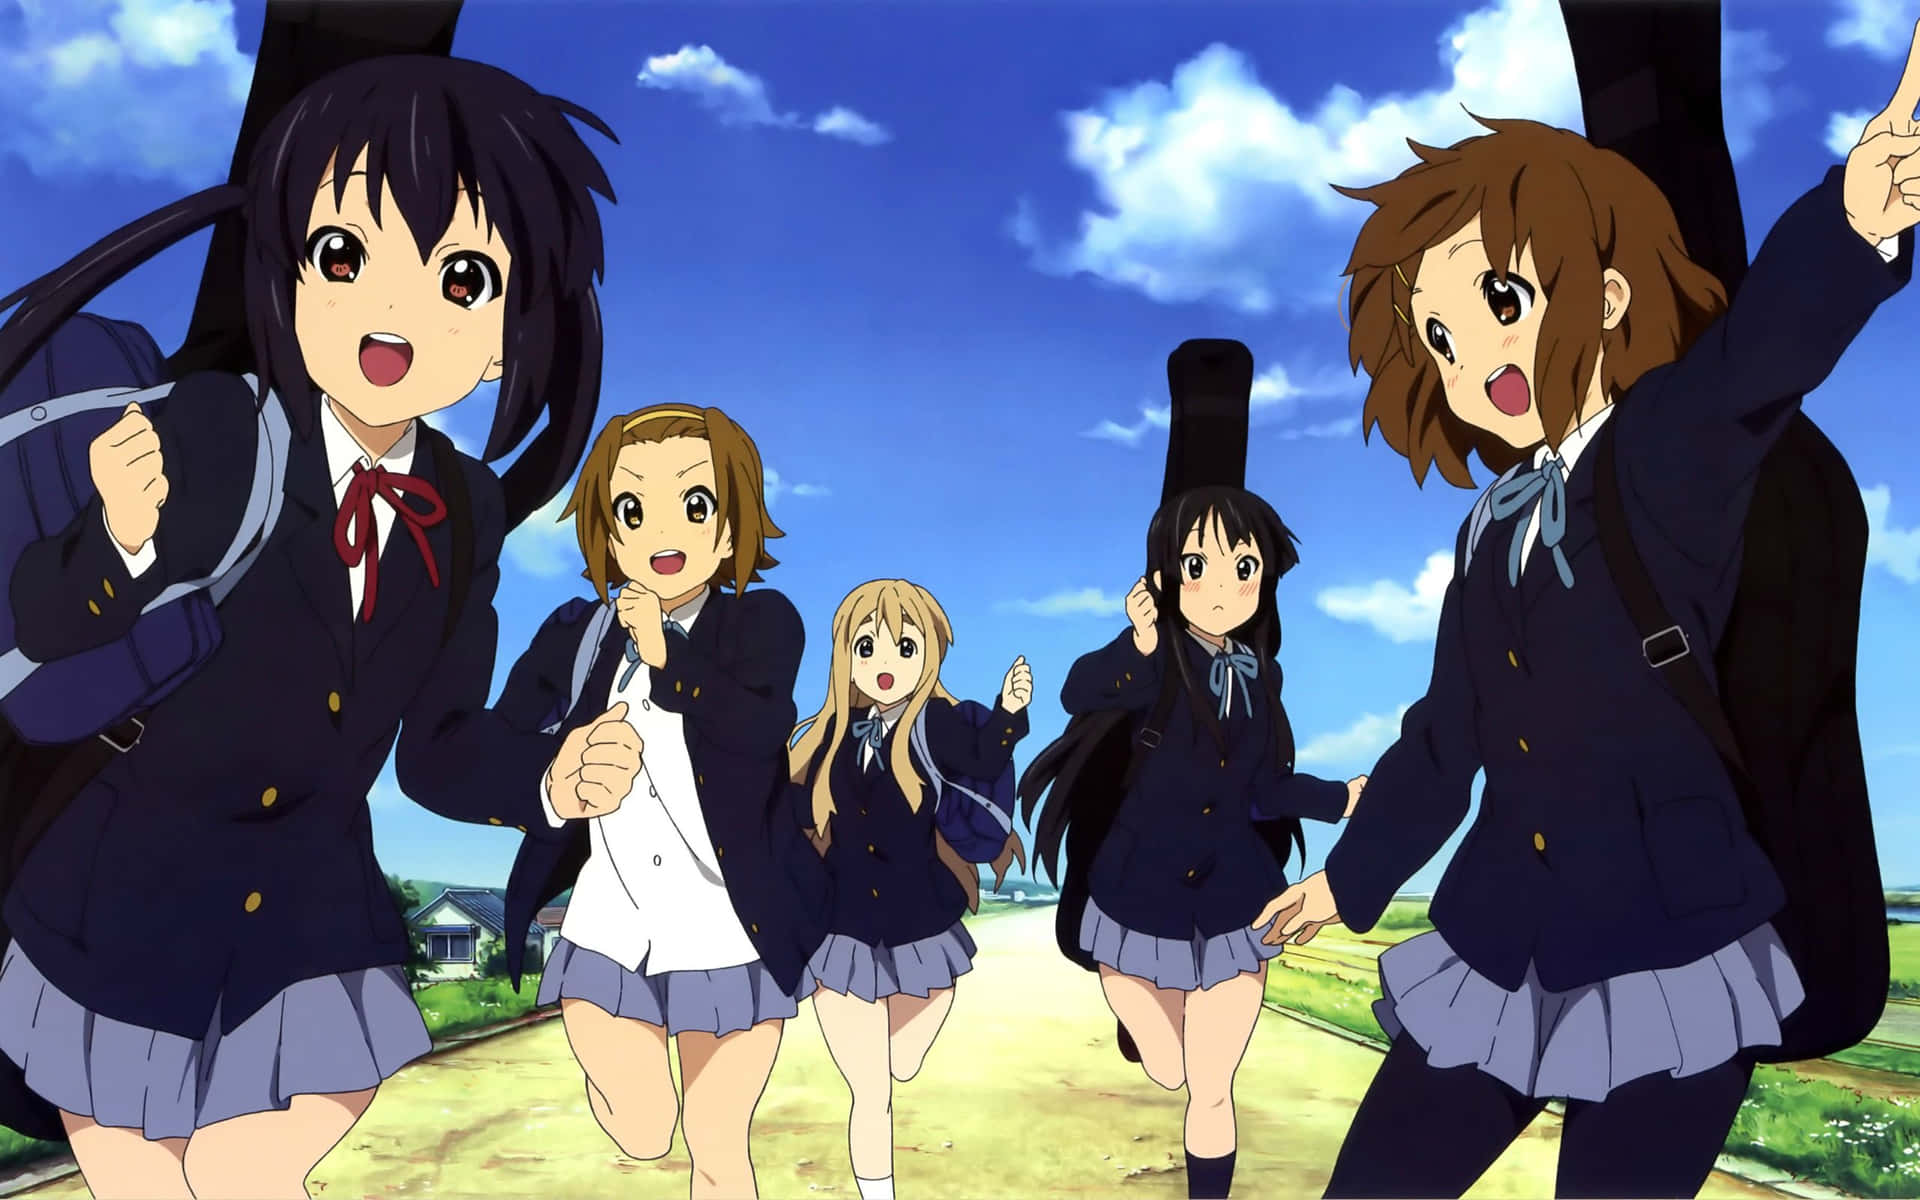 A Group Of Girls In School Uniforms Walking Down A Road